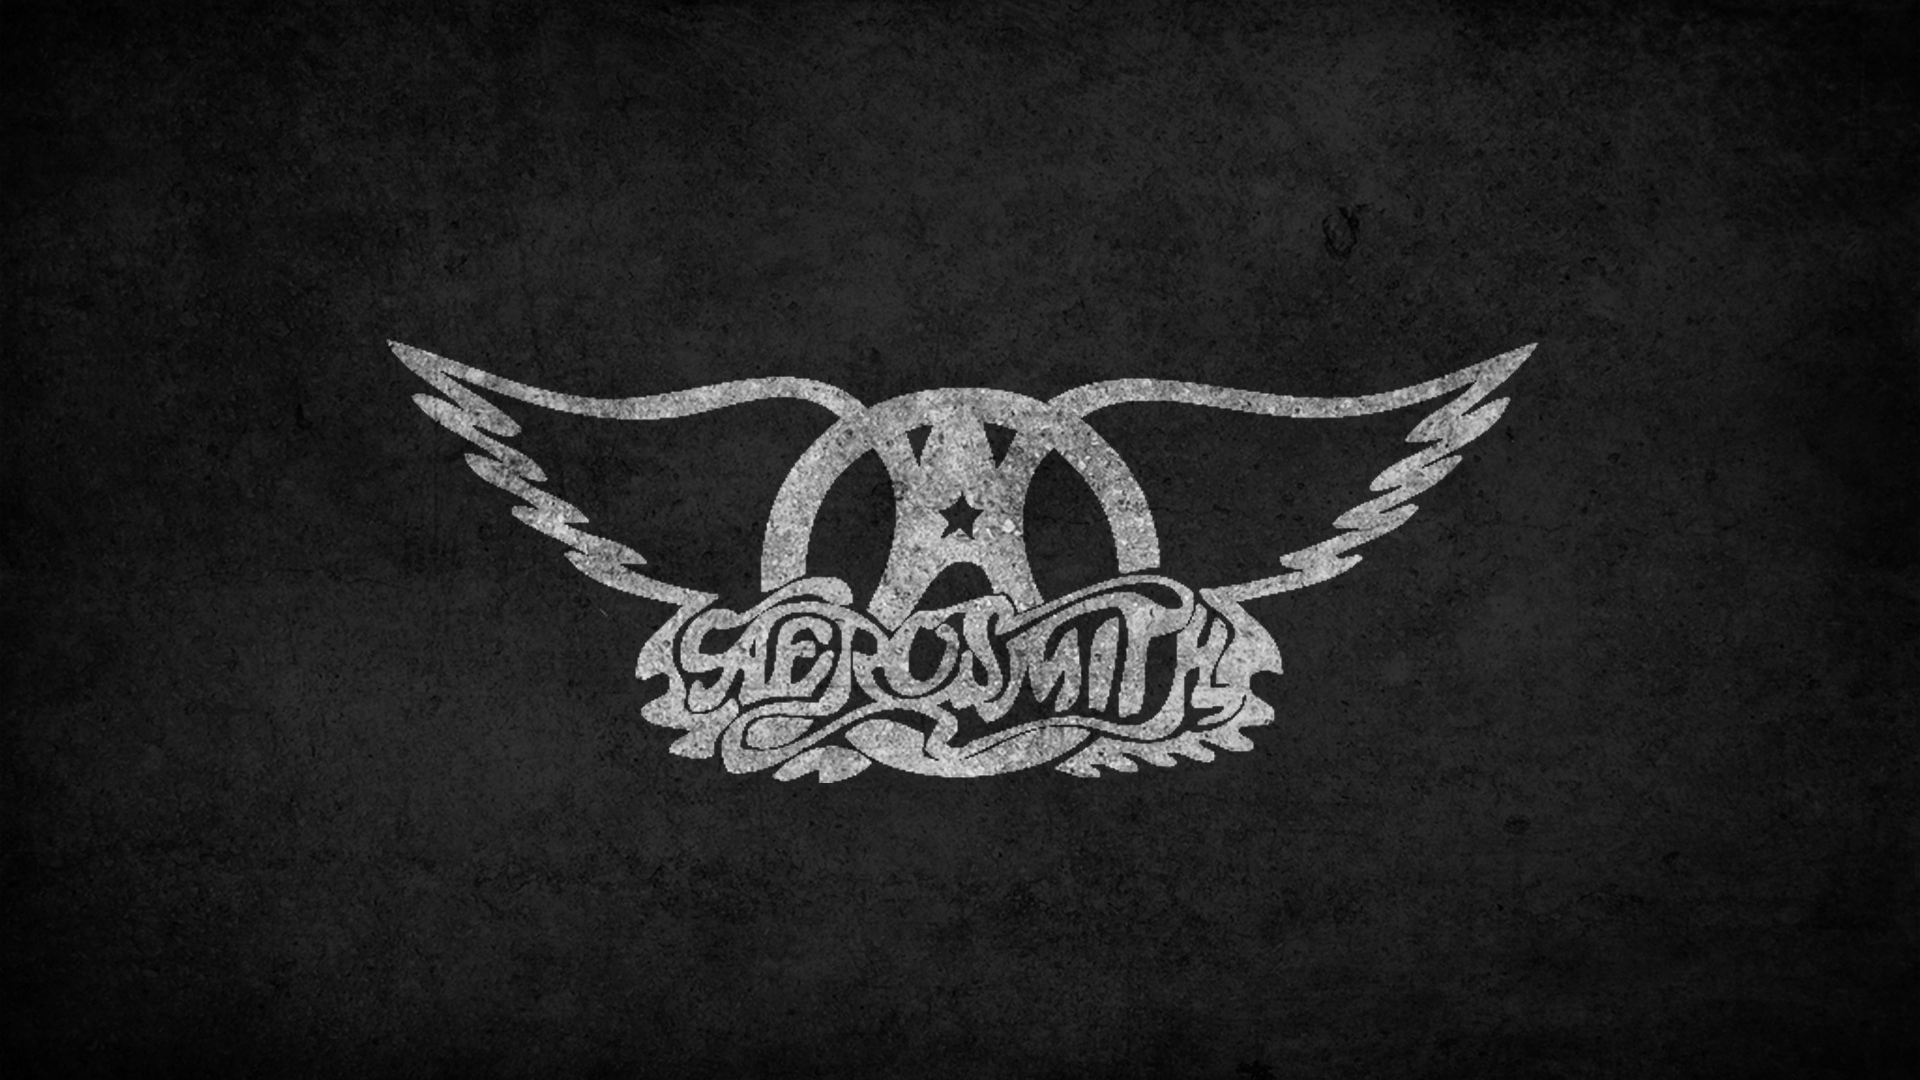 Aerosmith Wallpaper Free Aerosmith Background